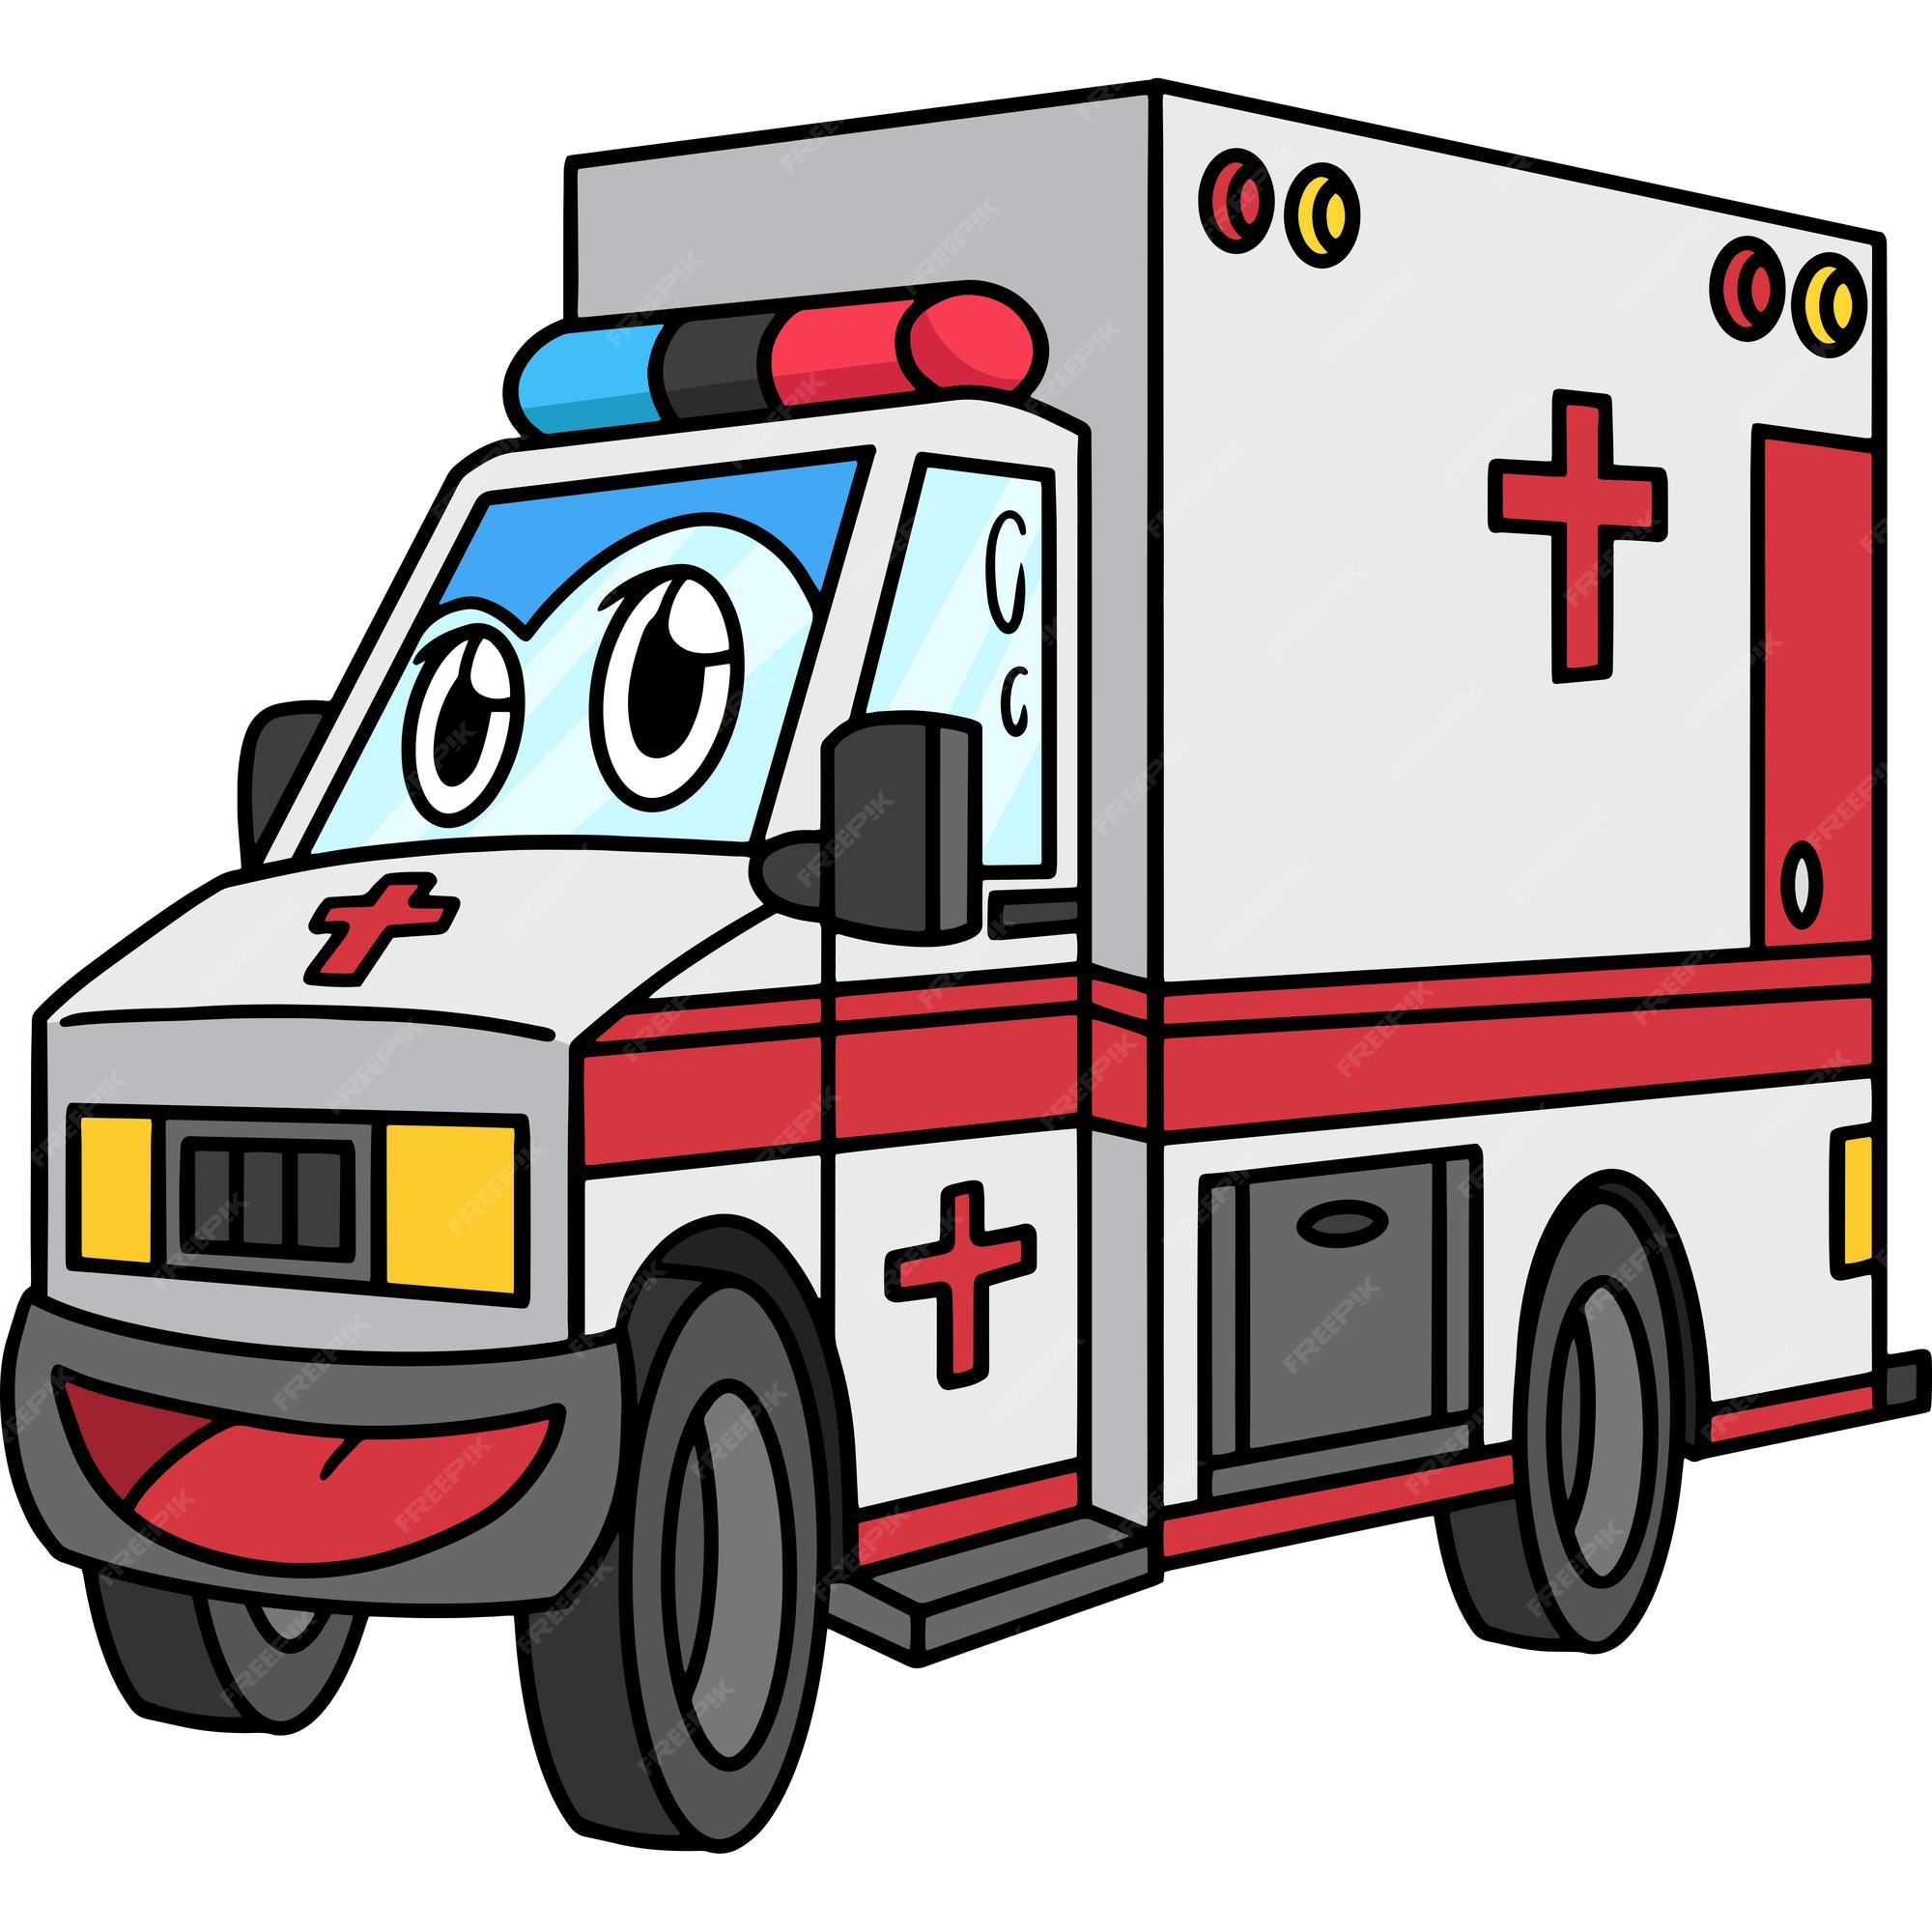 Cartoon Ambulance Images - Free Download on Freepik